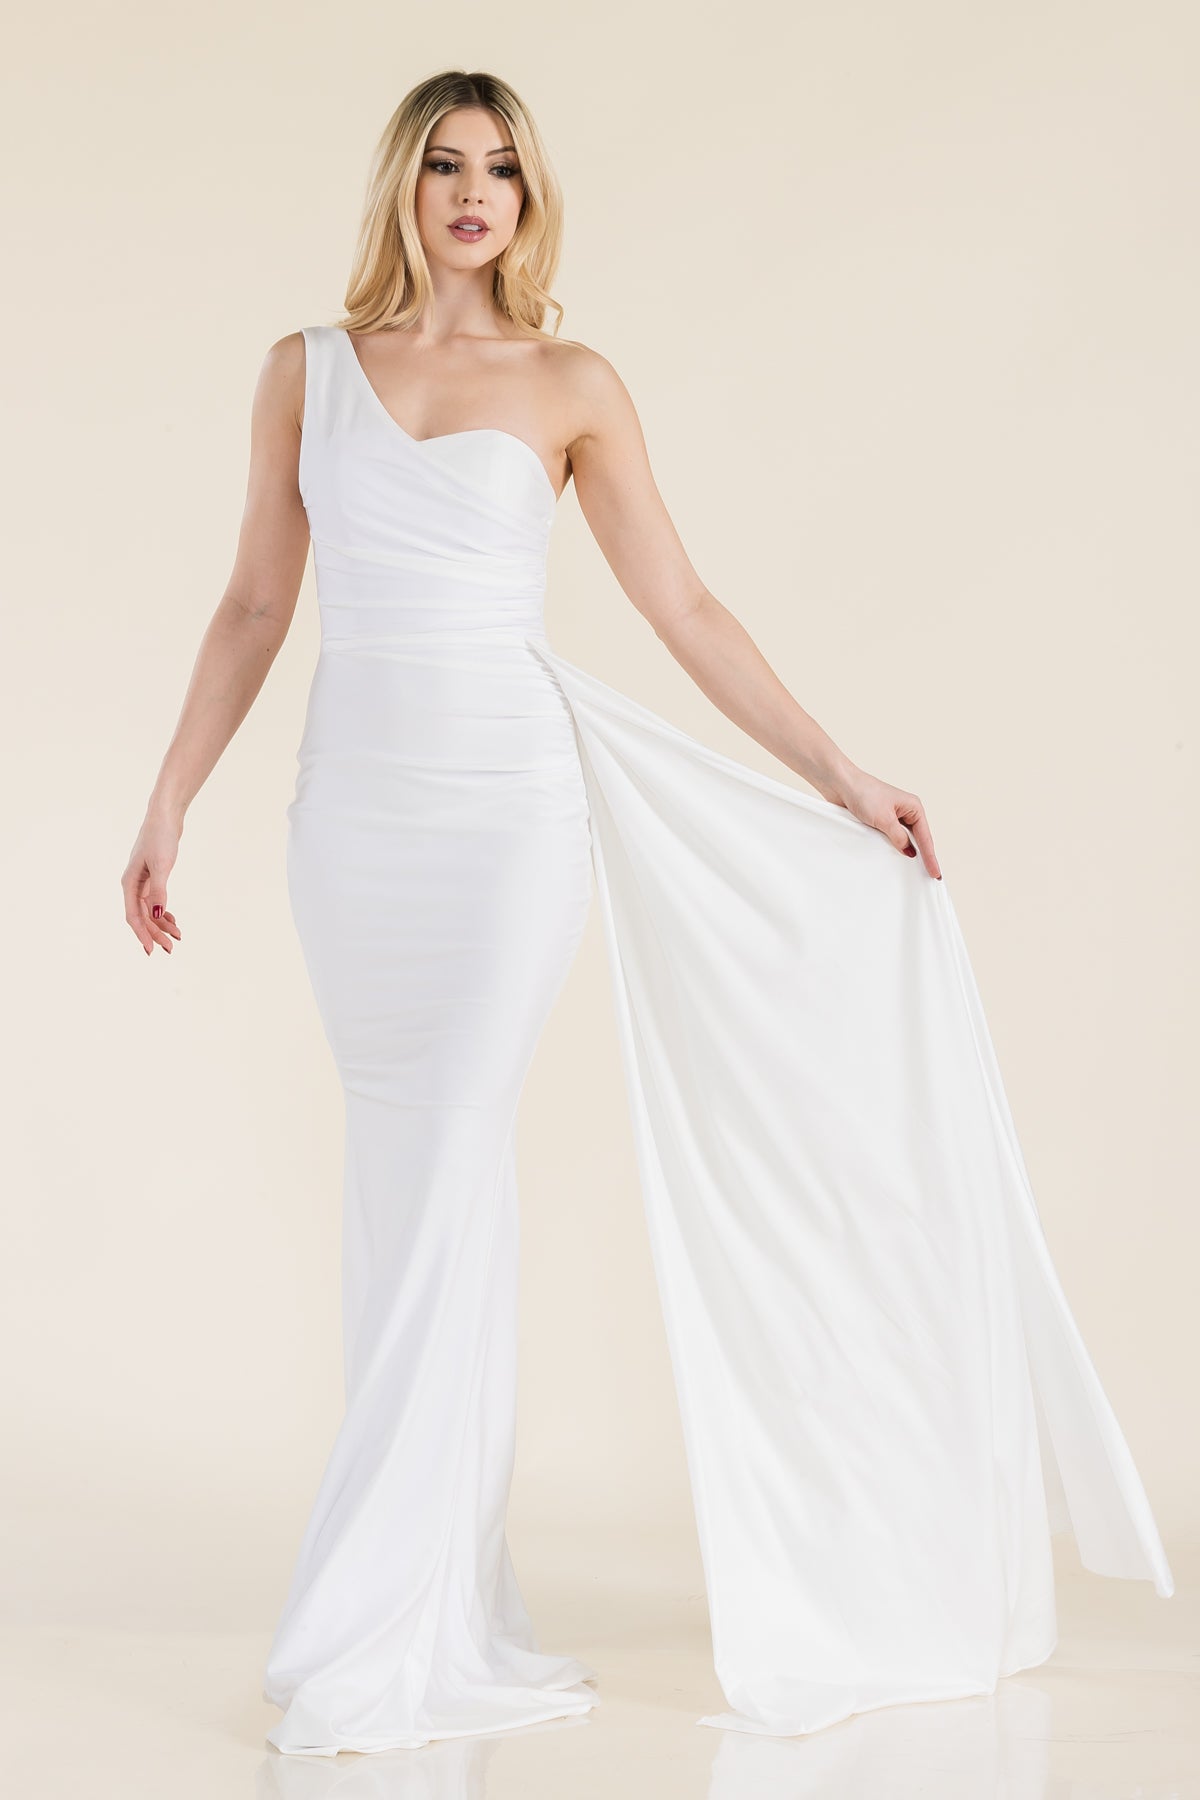 Prima Dress -SA502383 One Shoulder Stretch Sheath Dress